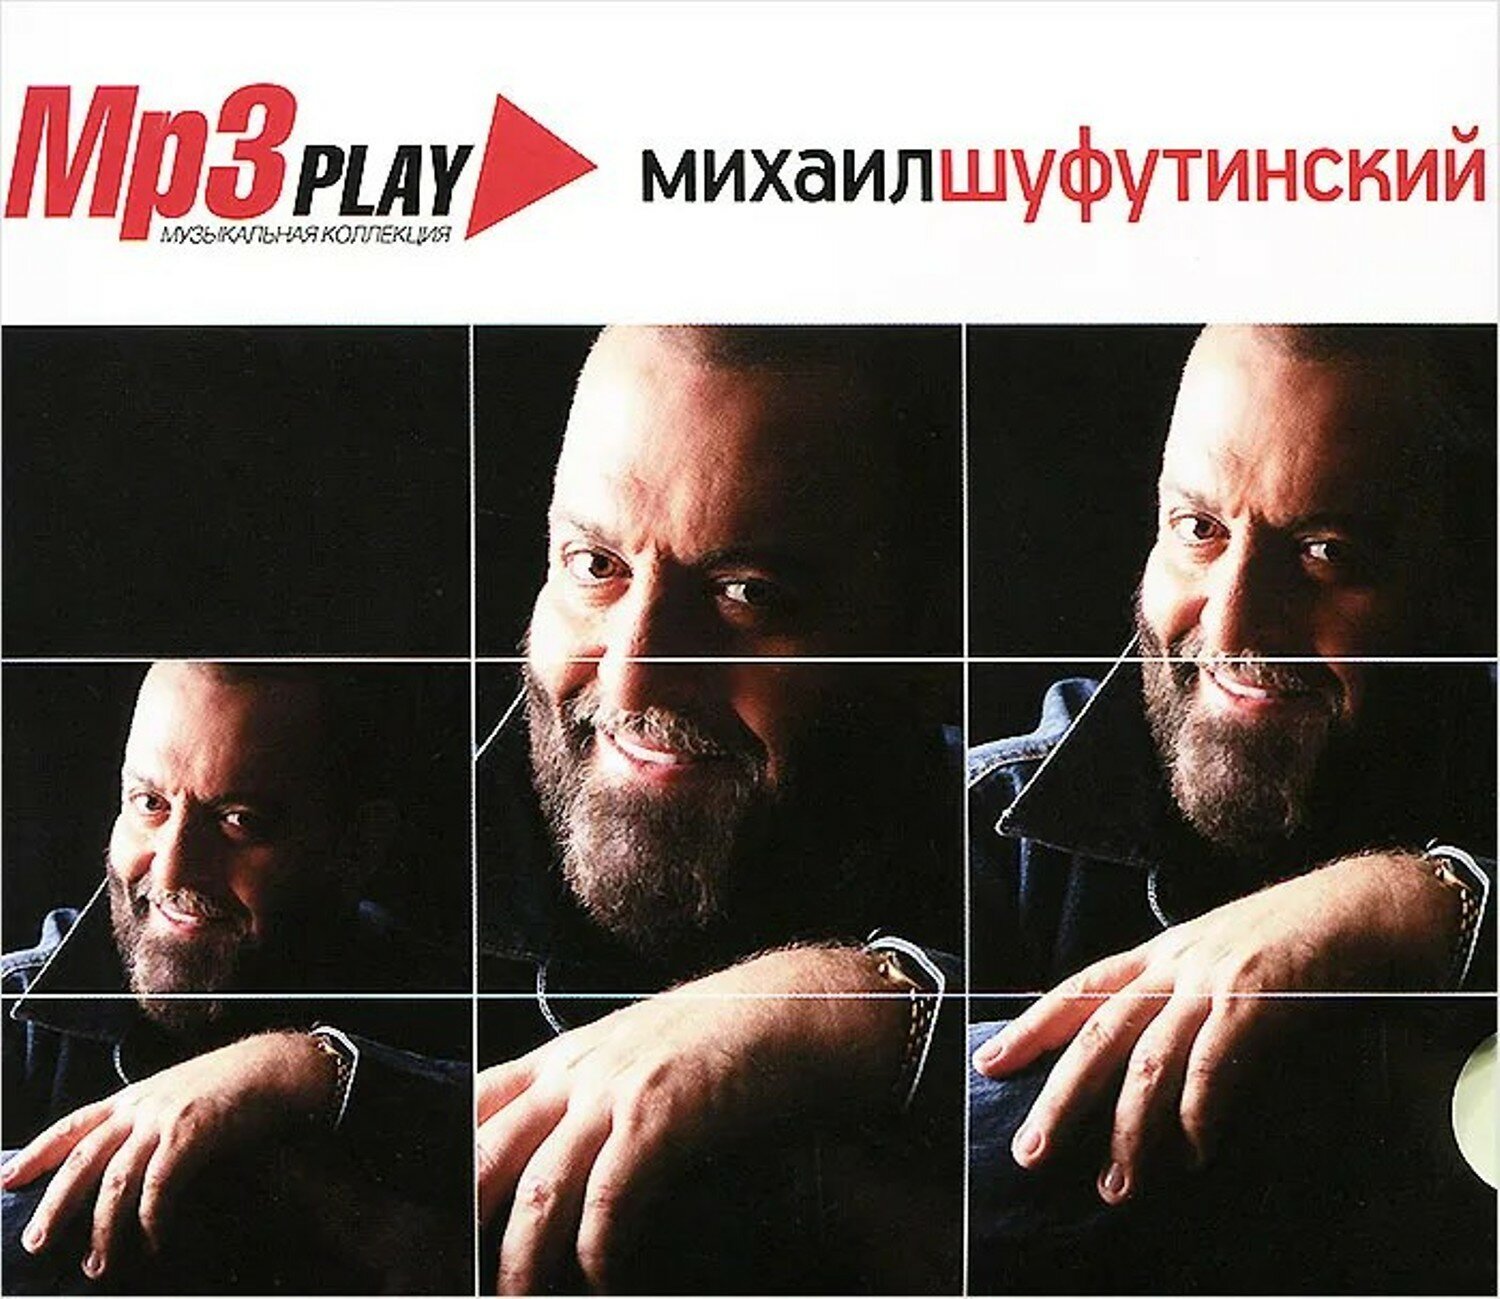 Михаил Шуфутинский MP3 Play Музыкальная Коллекция (MP3) United Music Group